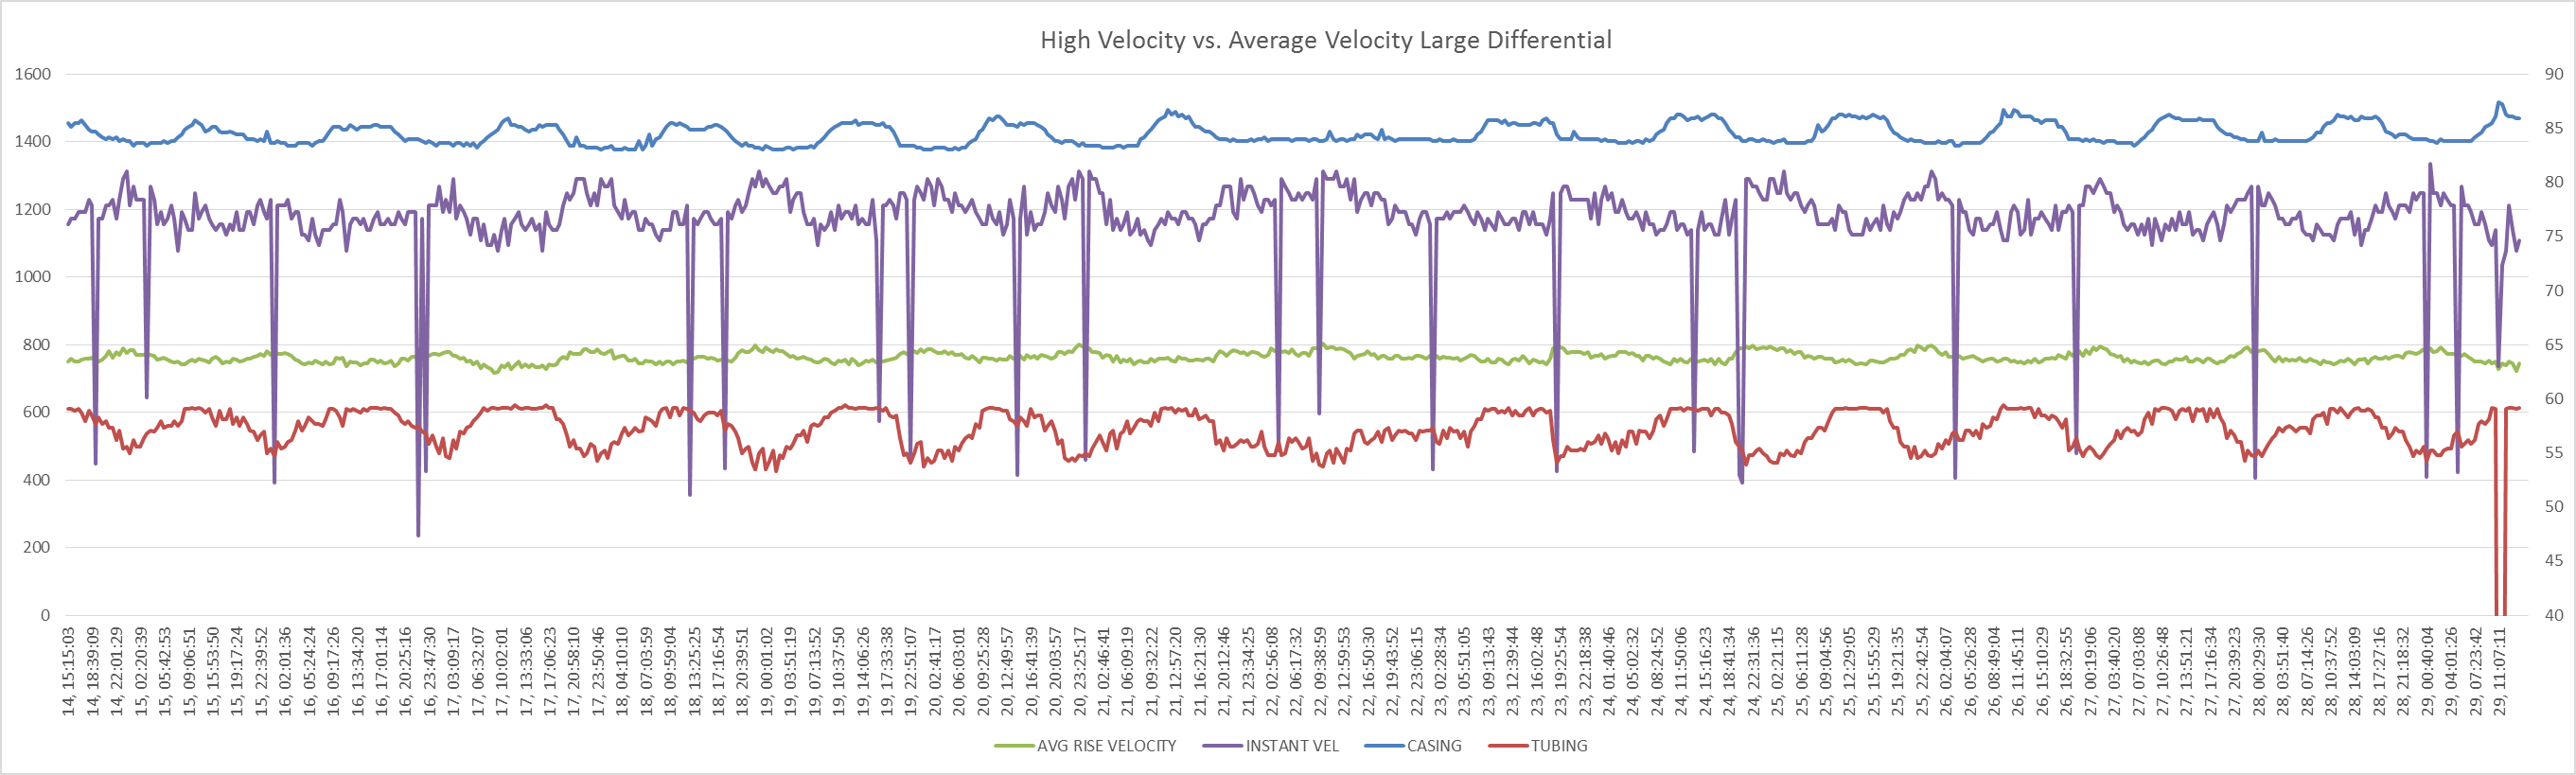 High Velocity vs. Average Velocity Large Differential